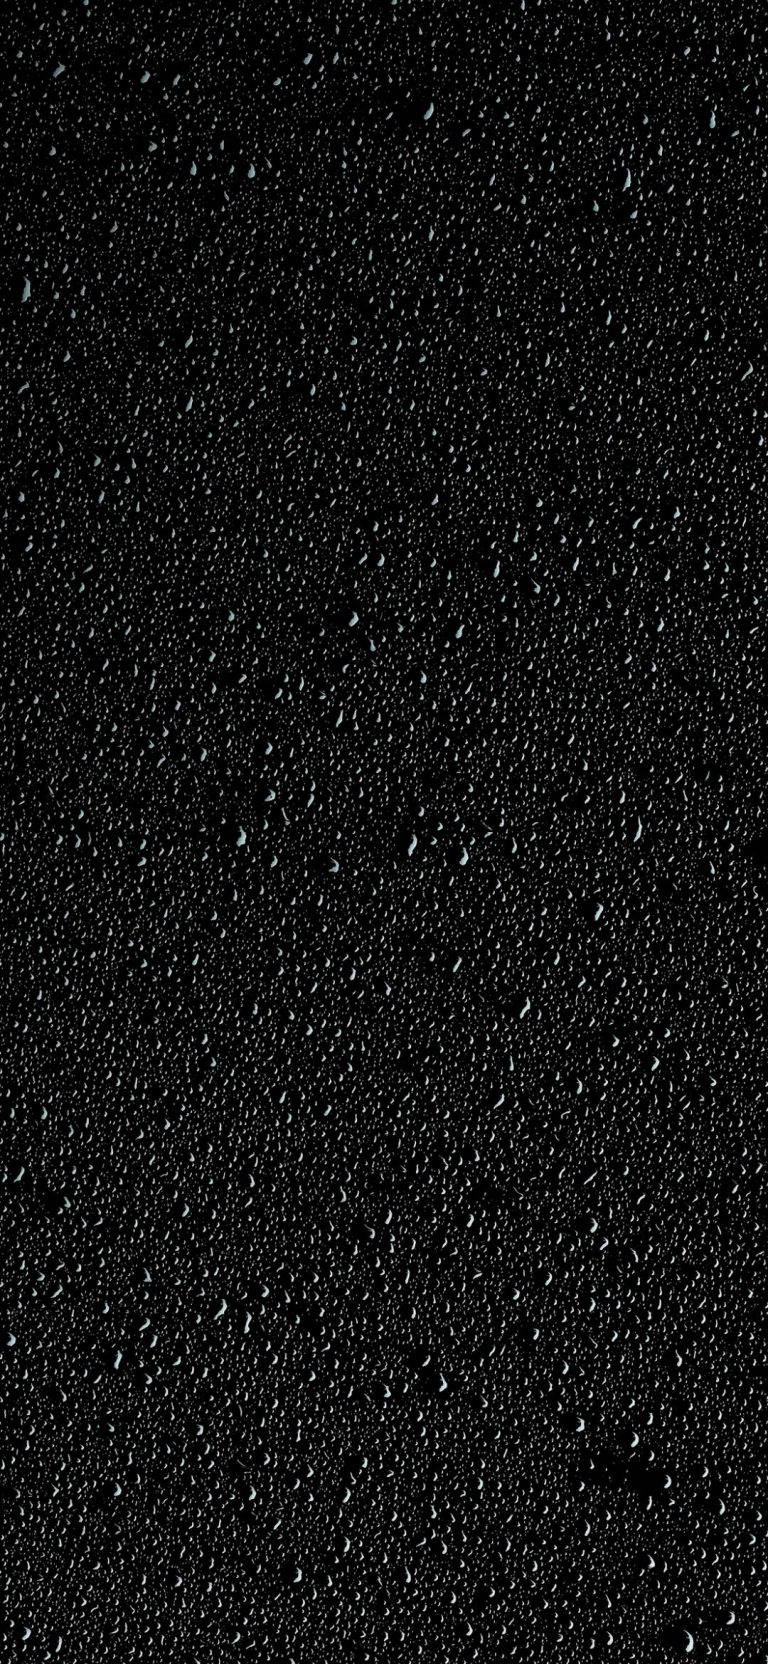 Black Water Droplets Iphone WhatsApp Wallpaper